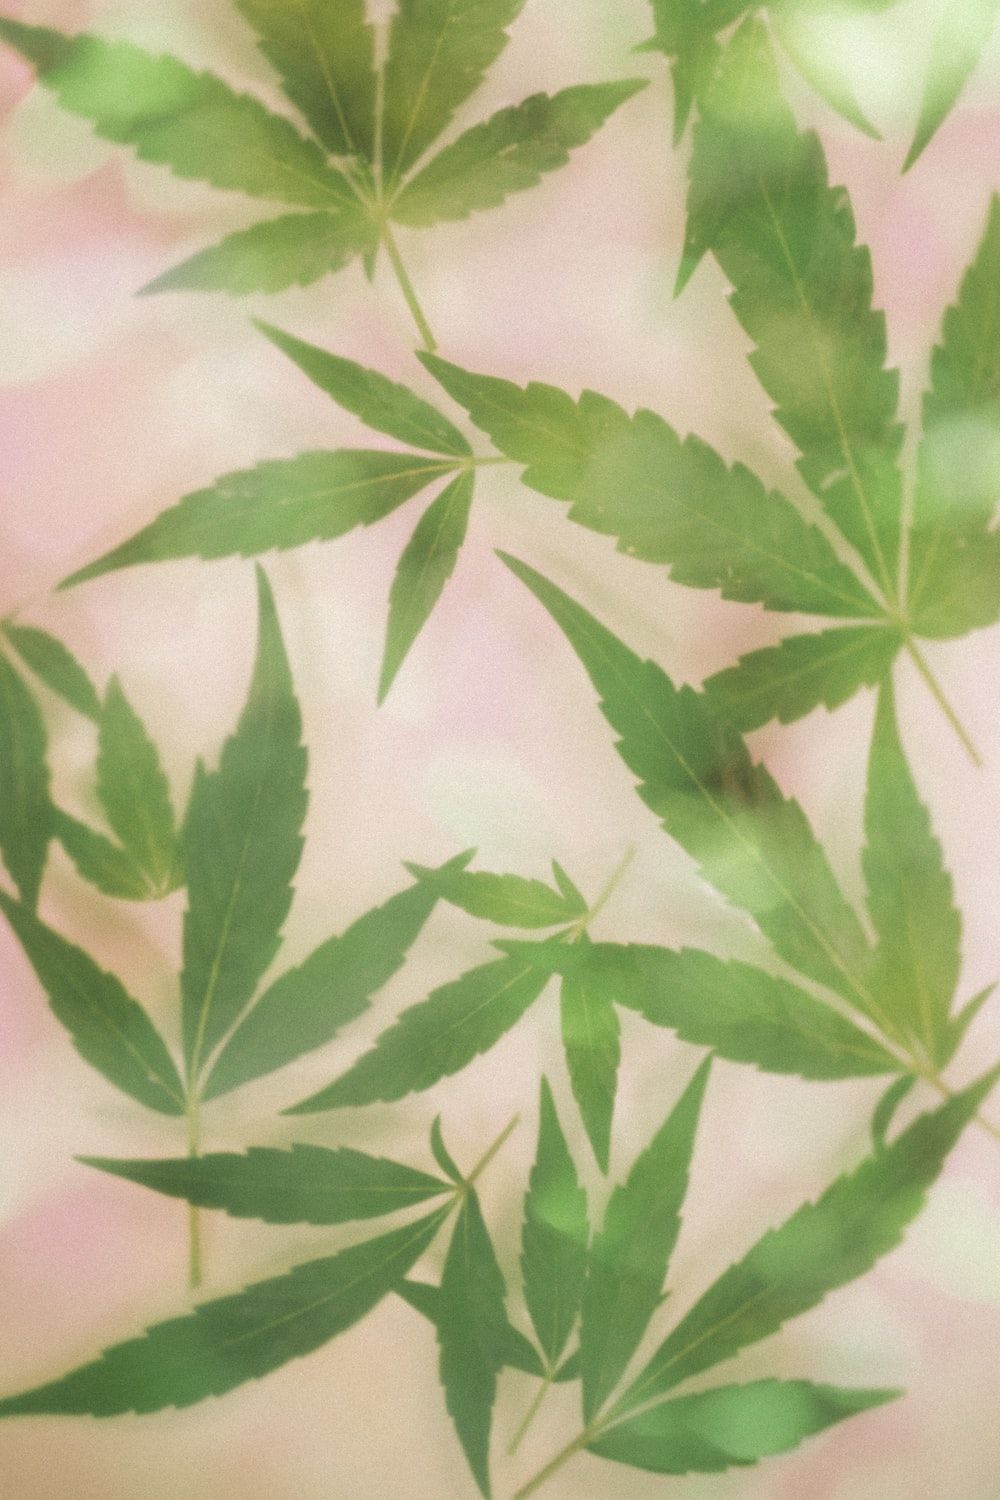 Marijuana Leaf Picture [HD]. Download Free Image